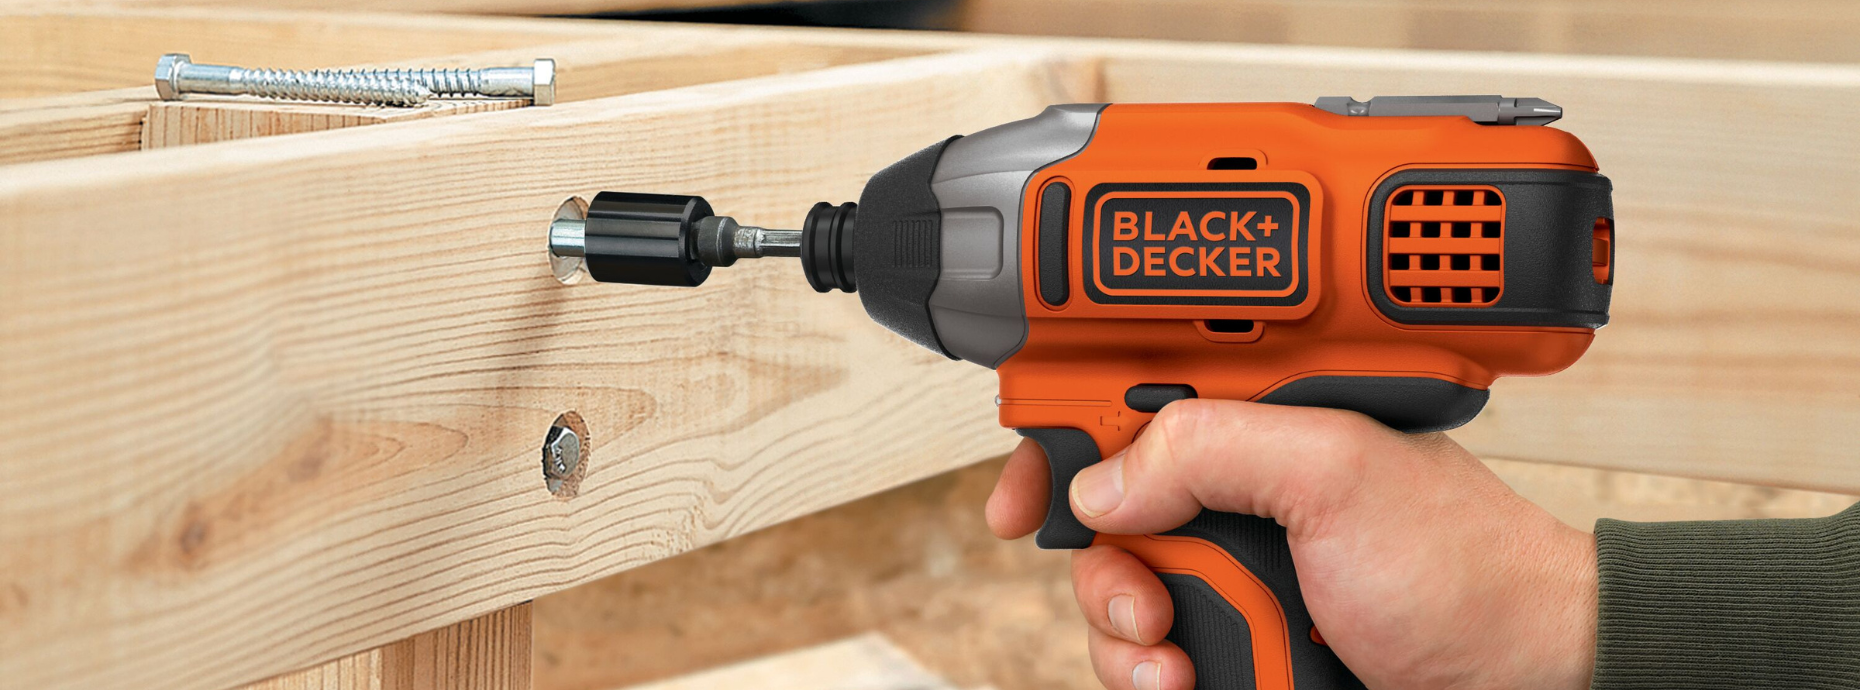  $25 To $50 - Black & Decker Power Tool Deals: Tools & Home  Improvement